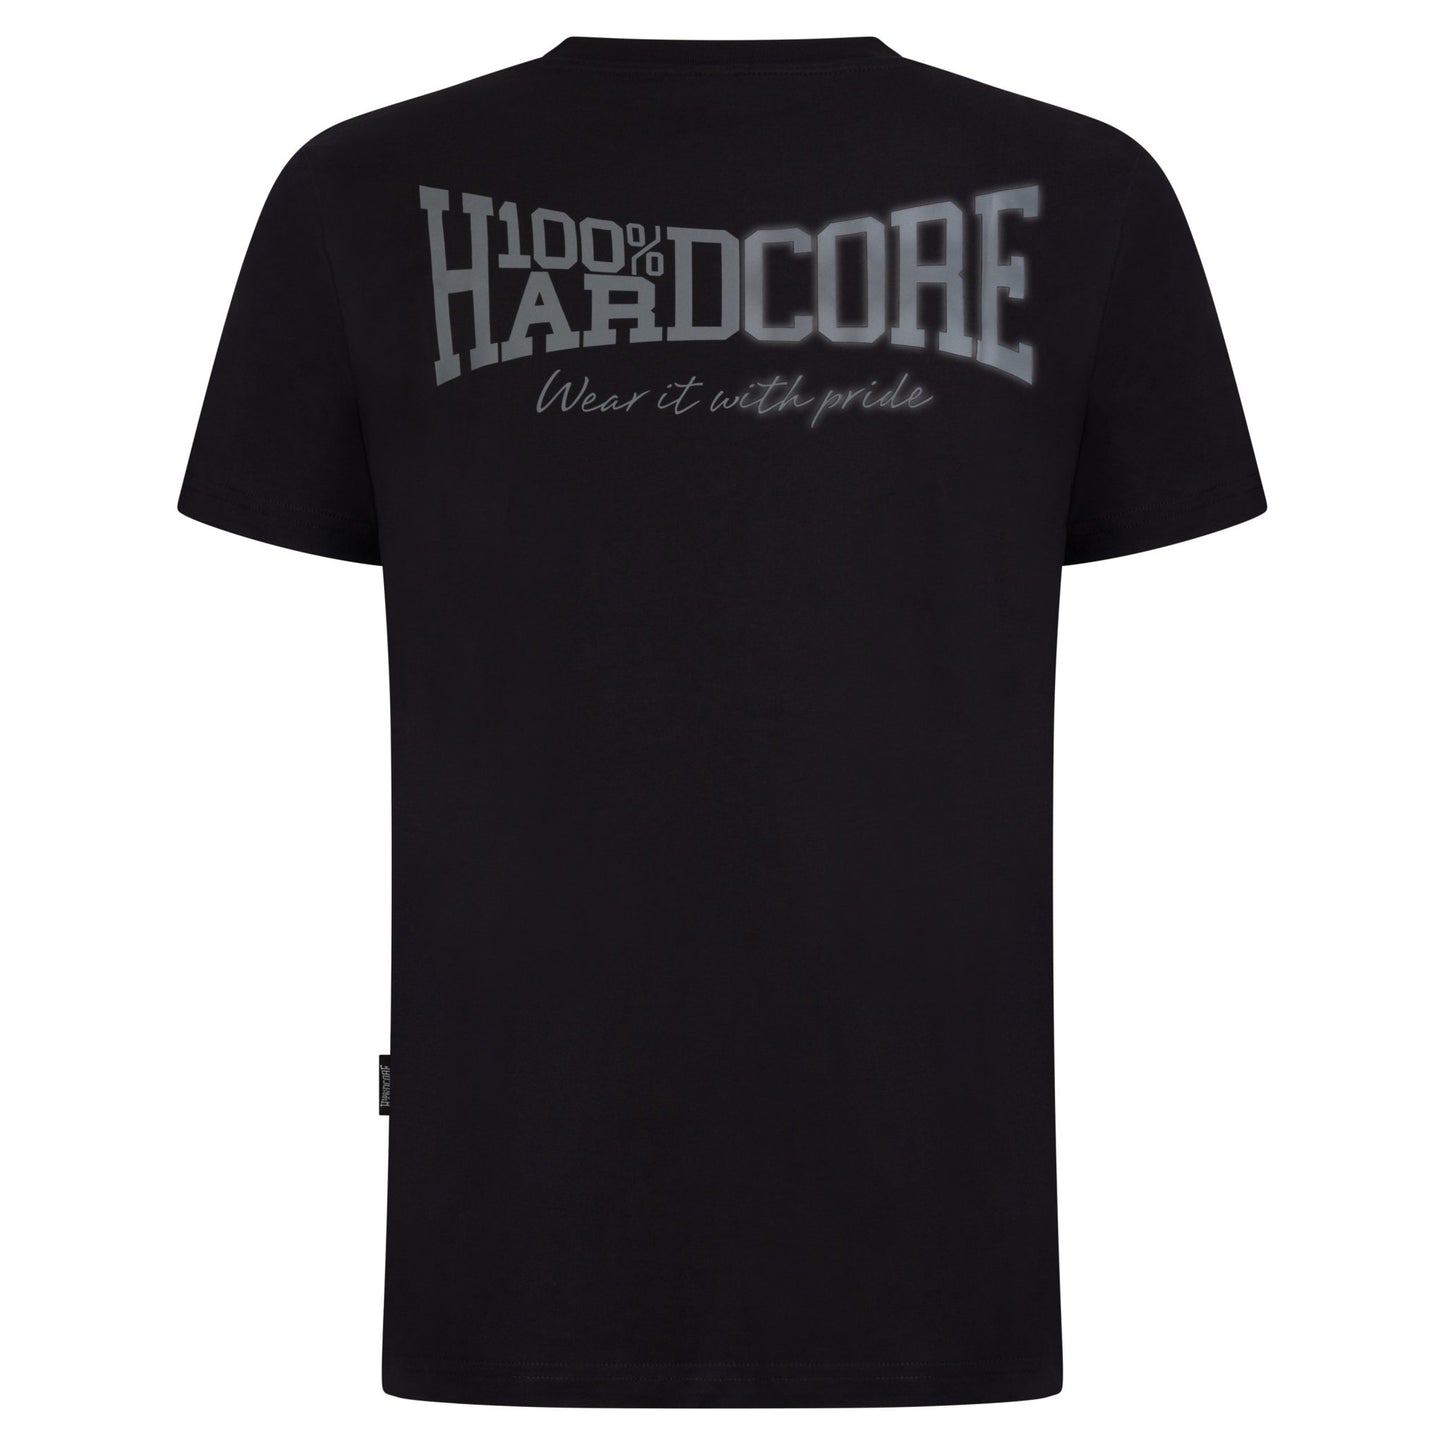 100% Hardcore T-Shirt Reflective